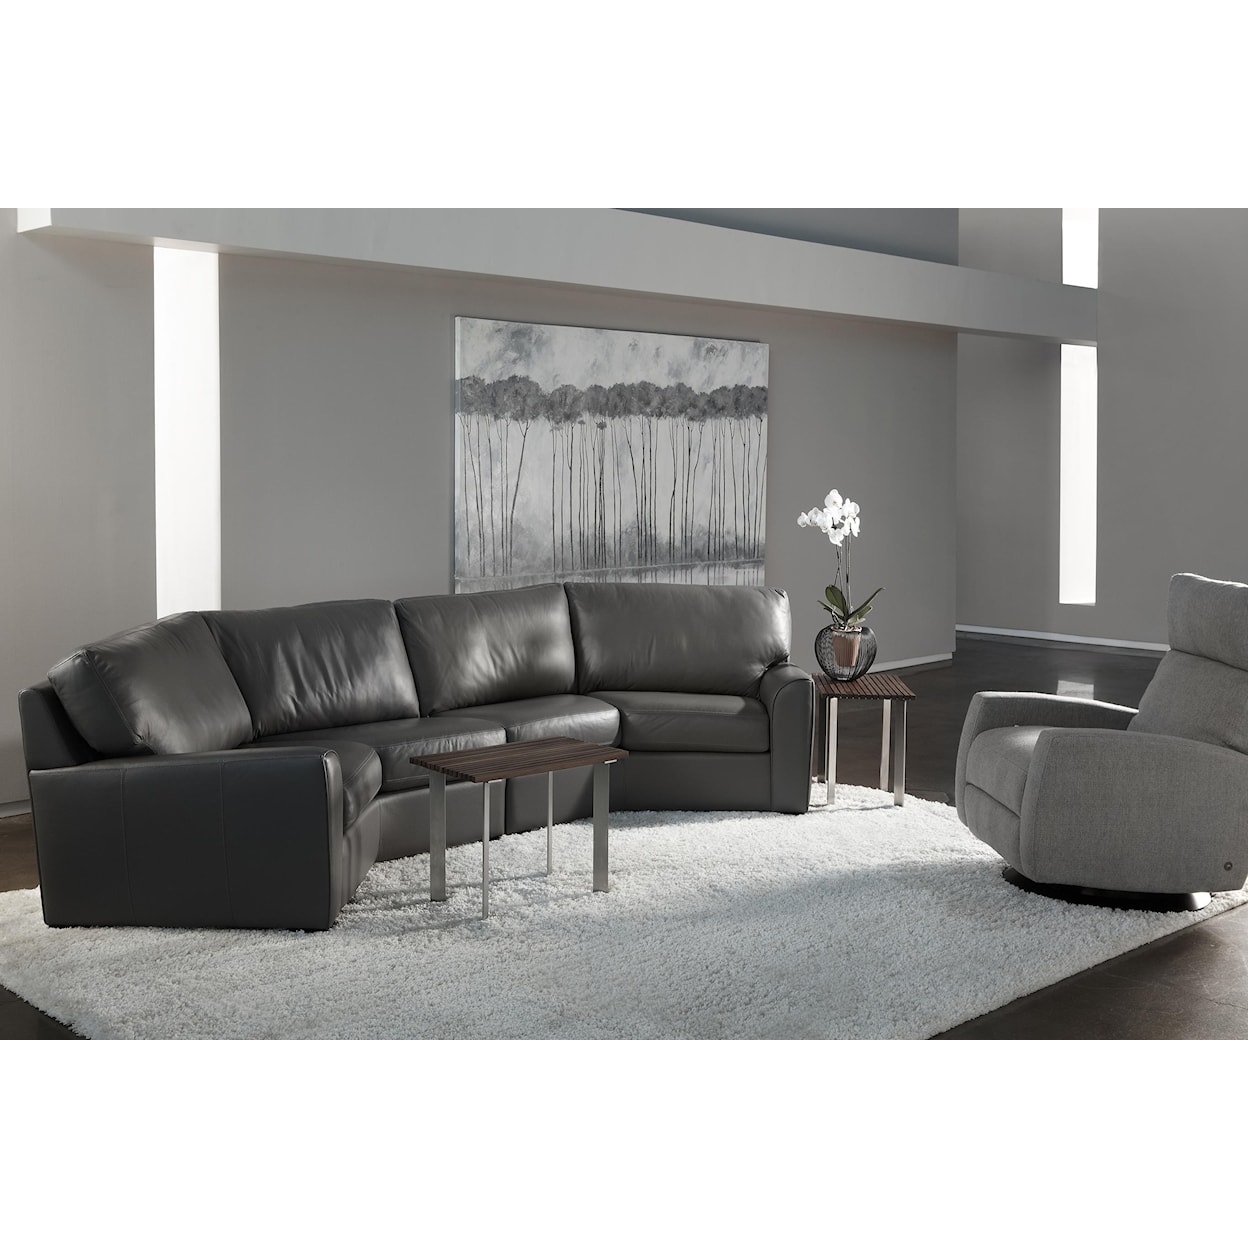 American Leather Kaden Sectional Sofa